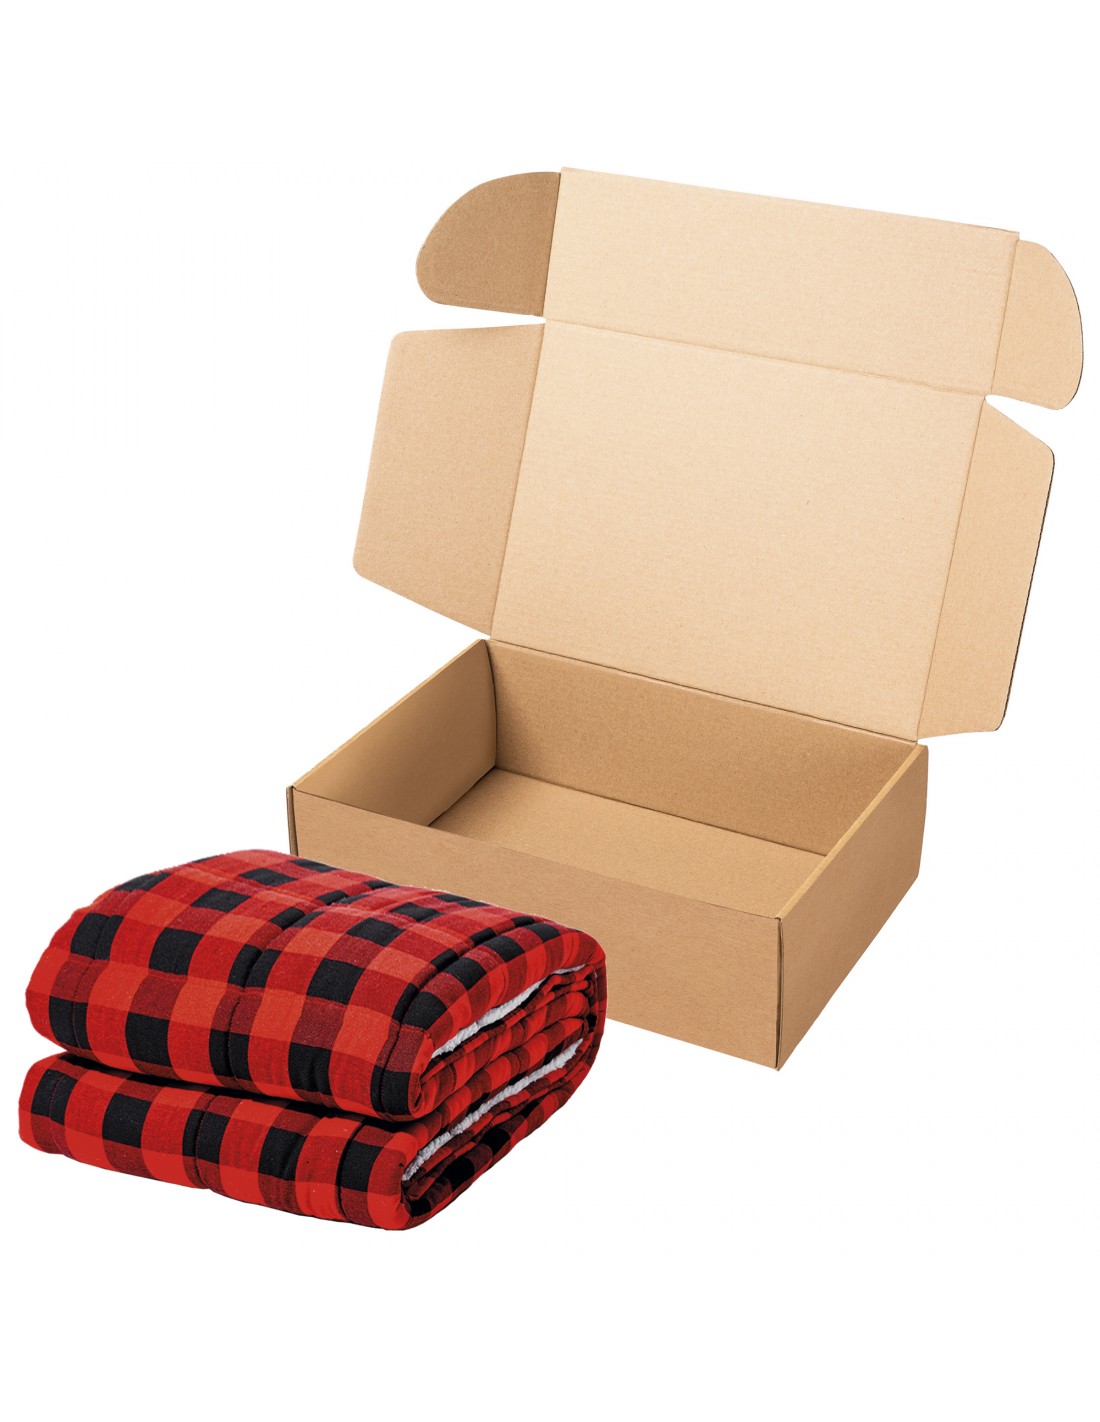 https://packerpro.co/794-thickbox_default/cajas-carton-ropa-kraft.jpg